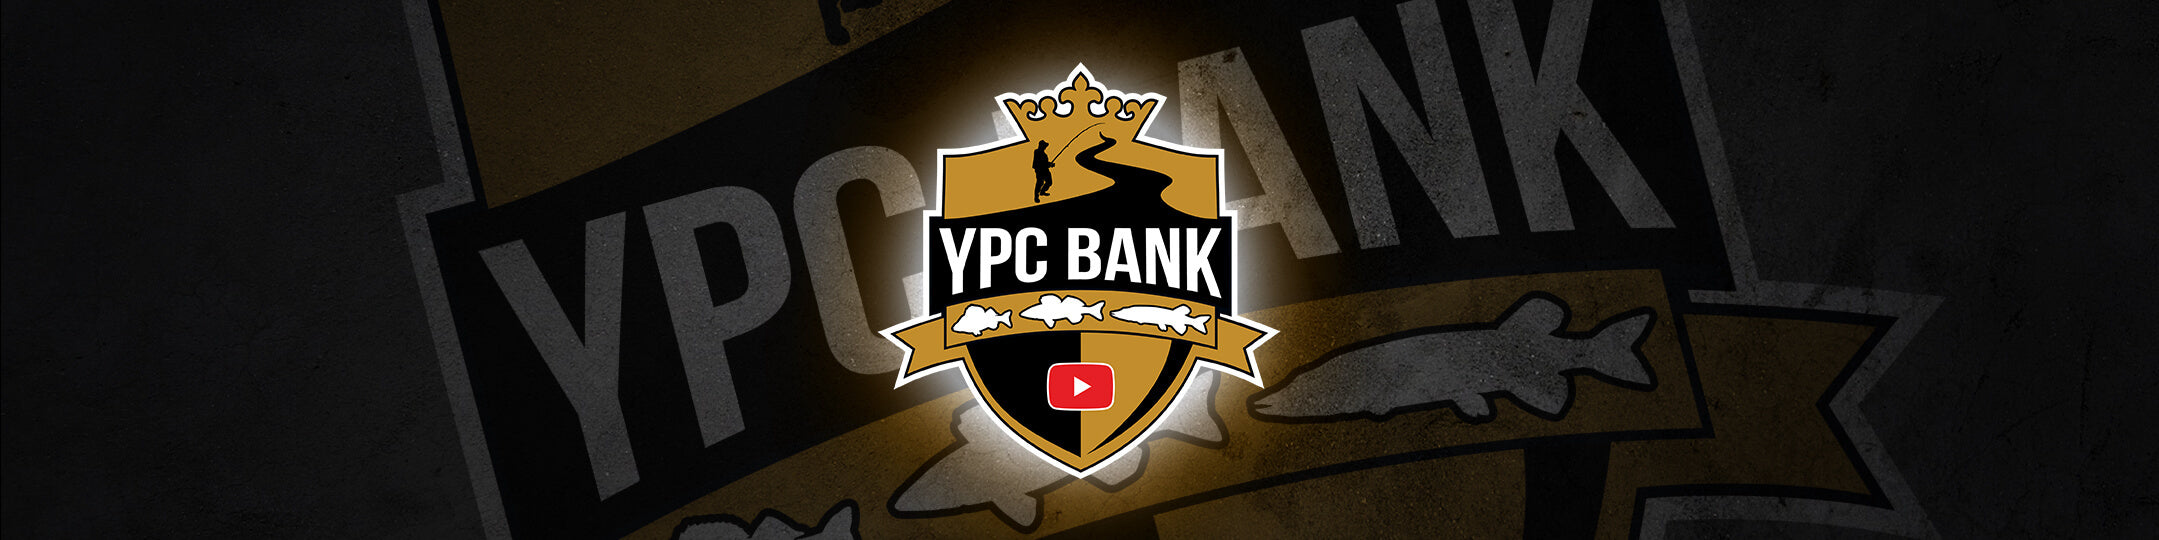 YPC-Bank